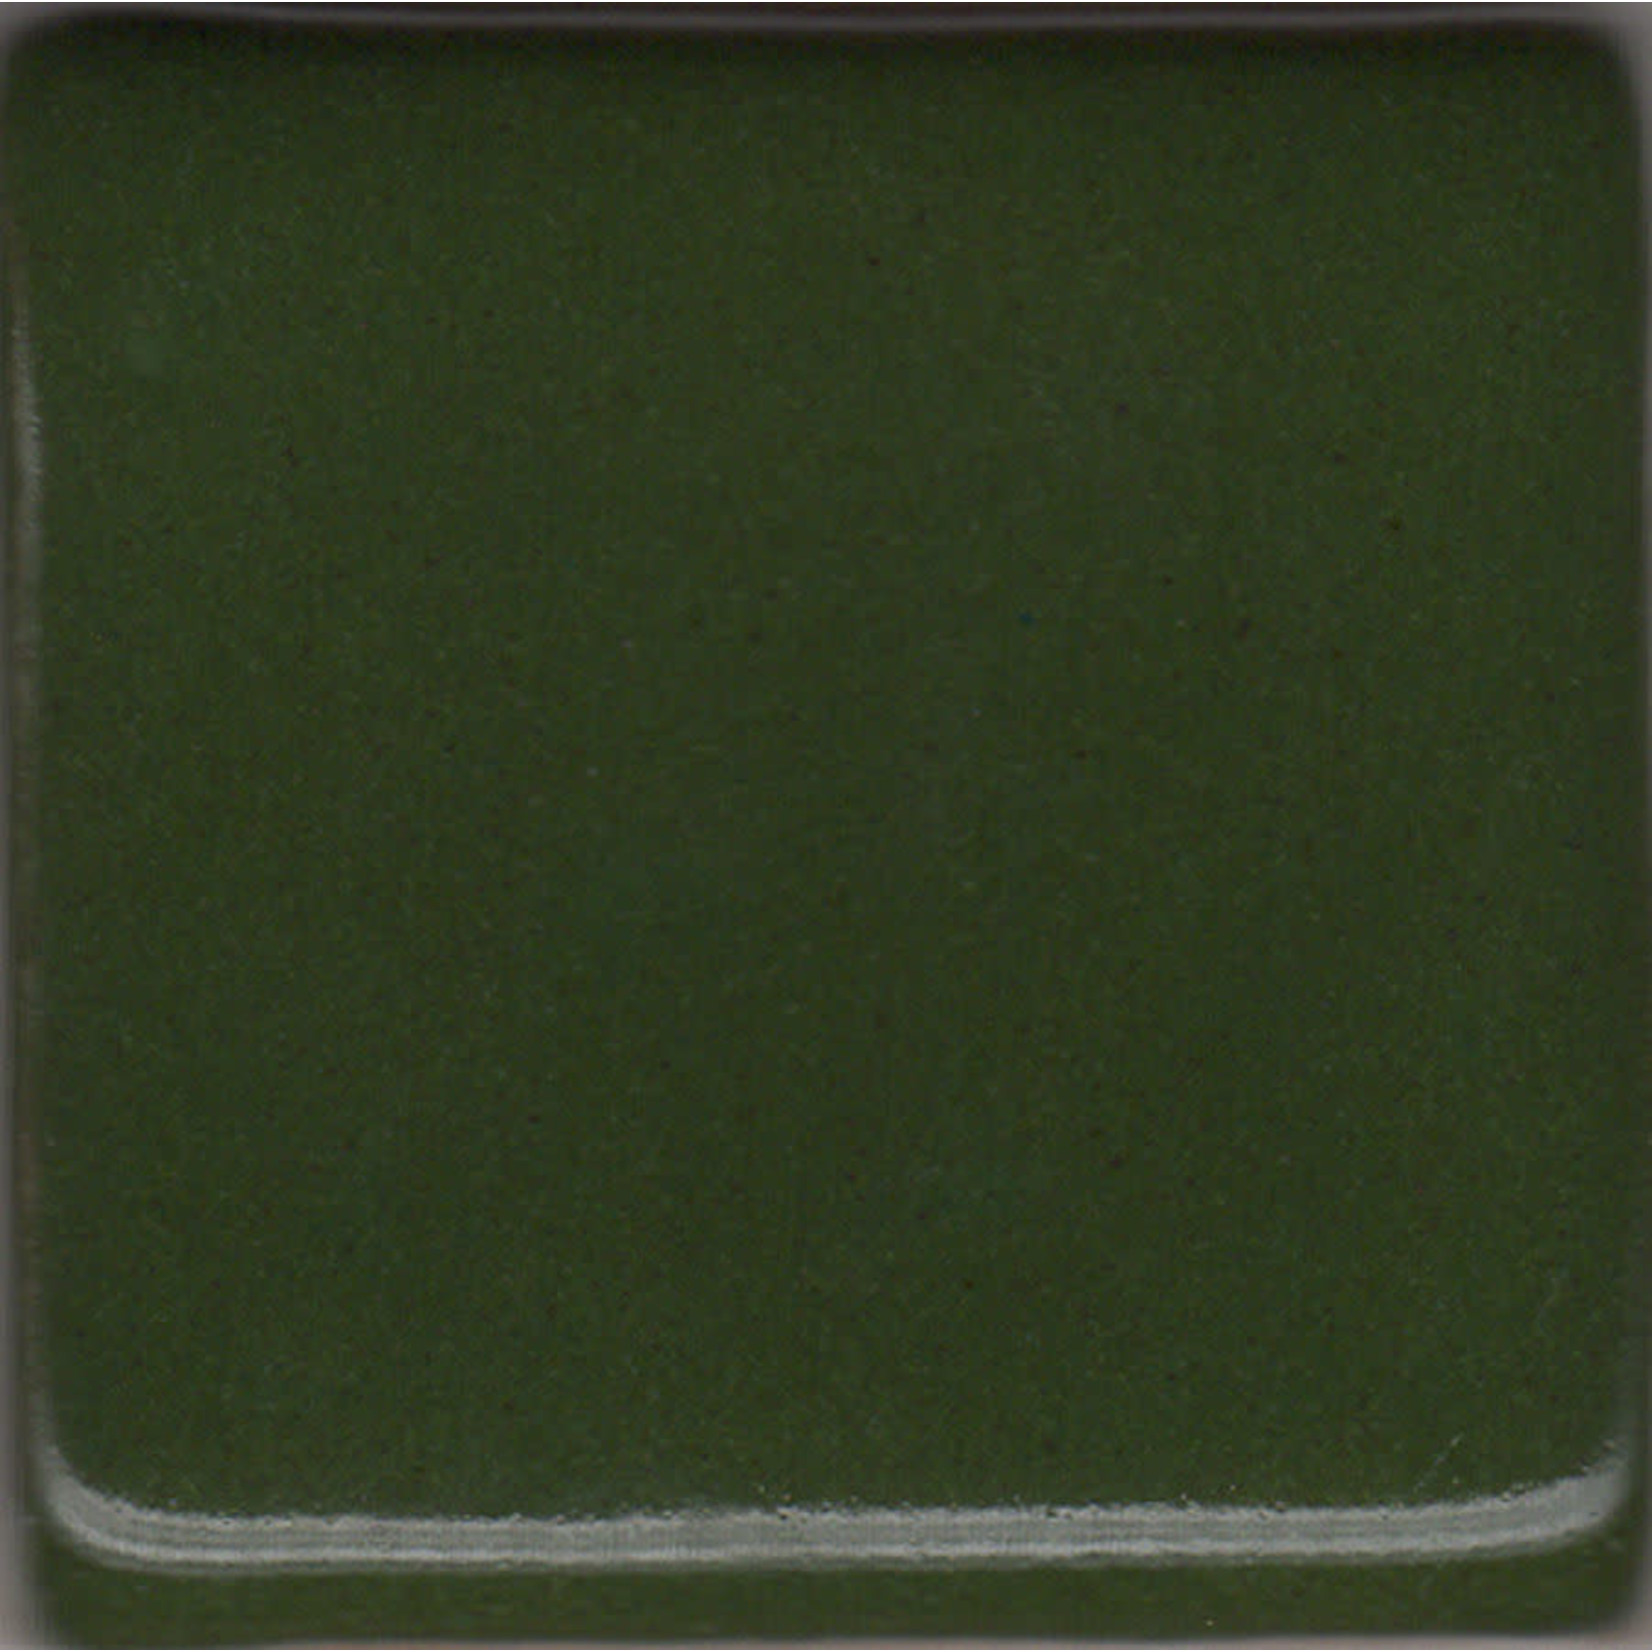 Coyote MBG005 - Chrome Green ^4-6 (Pint)